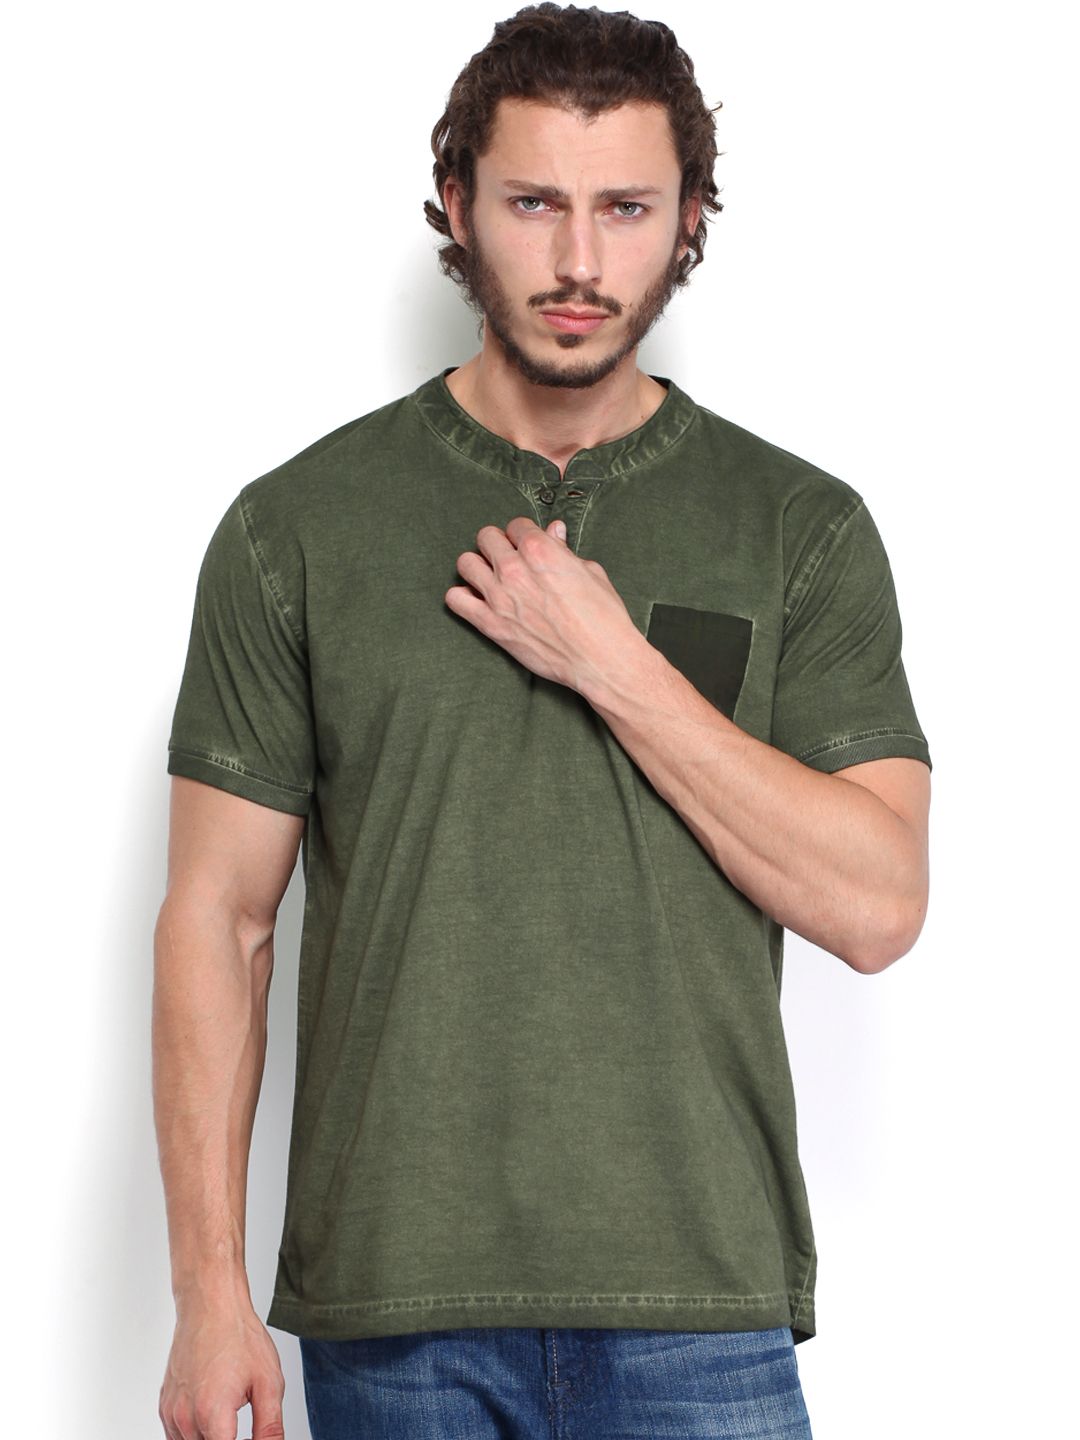 olive green shirt mens